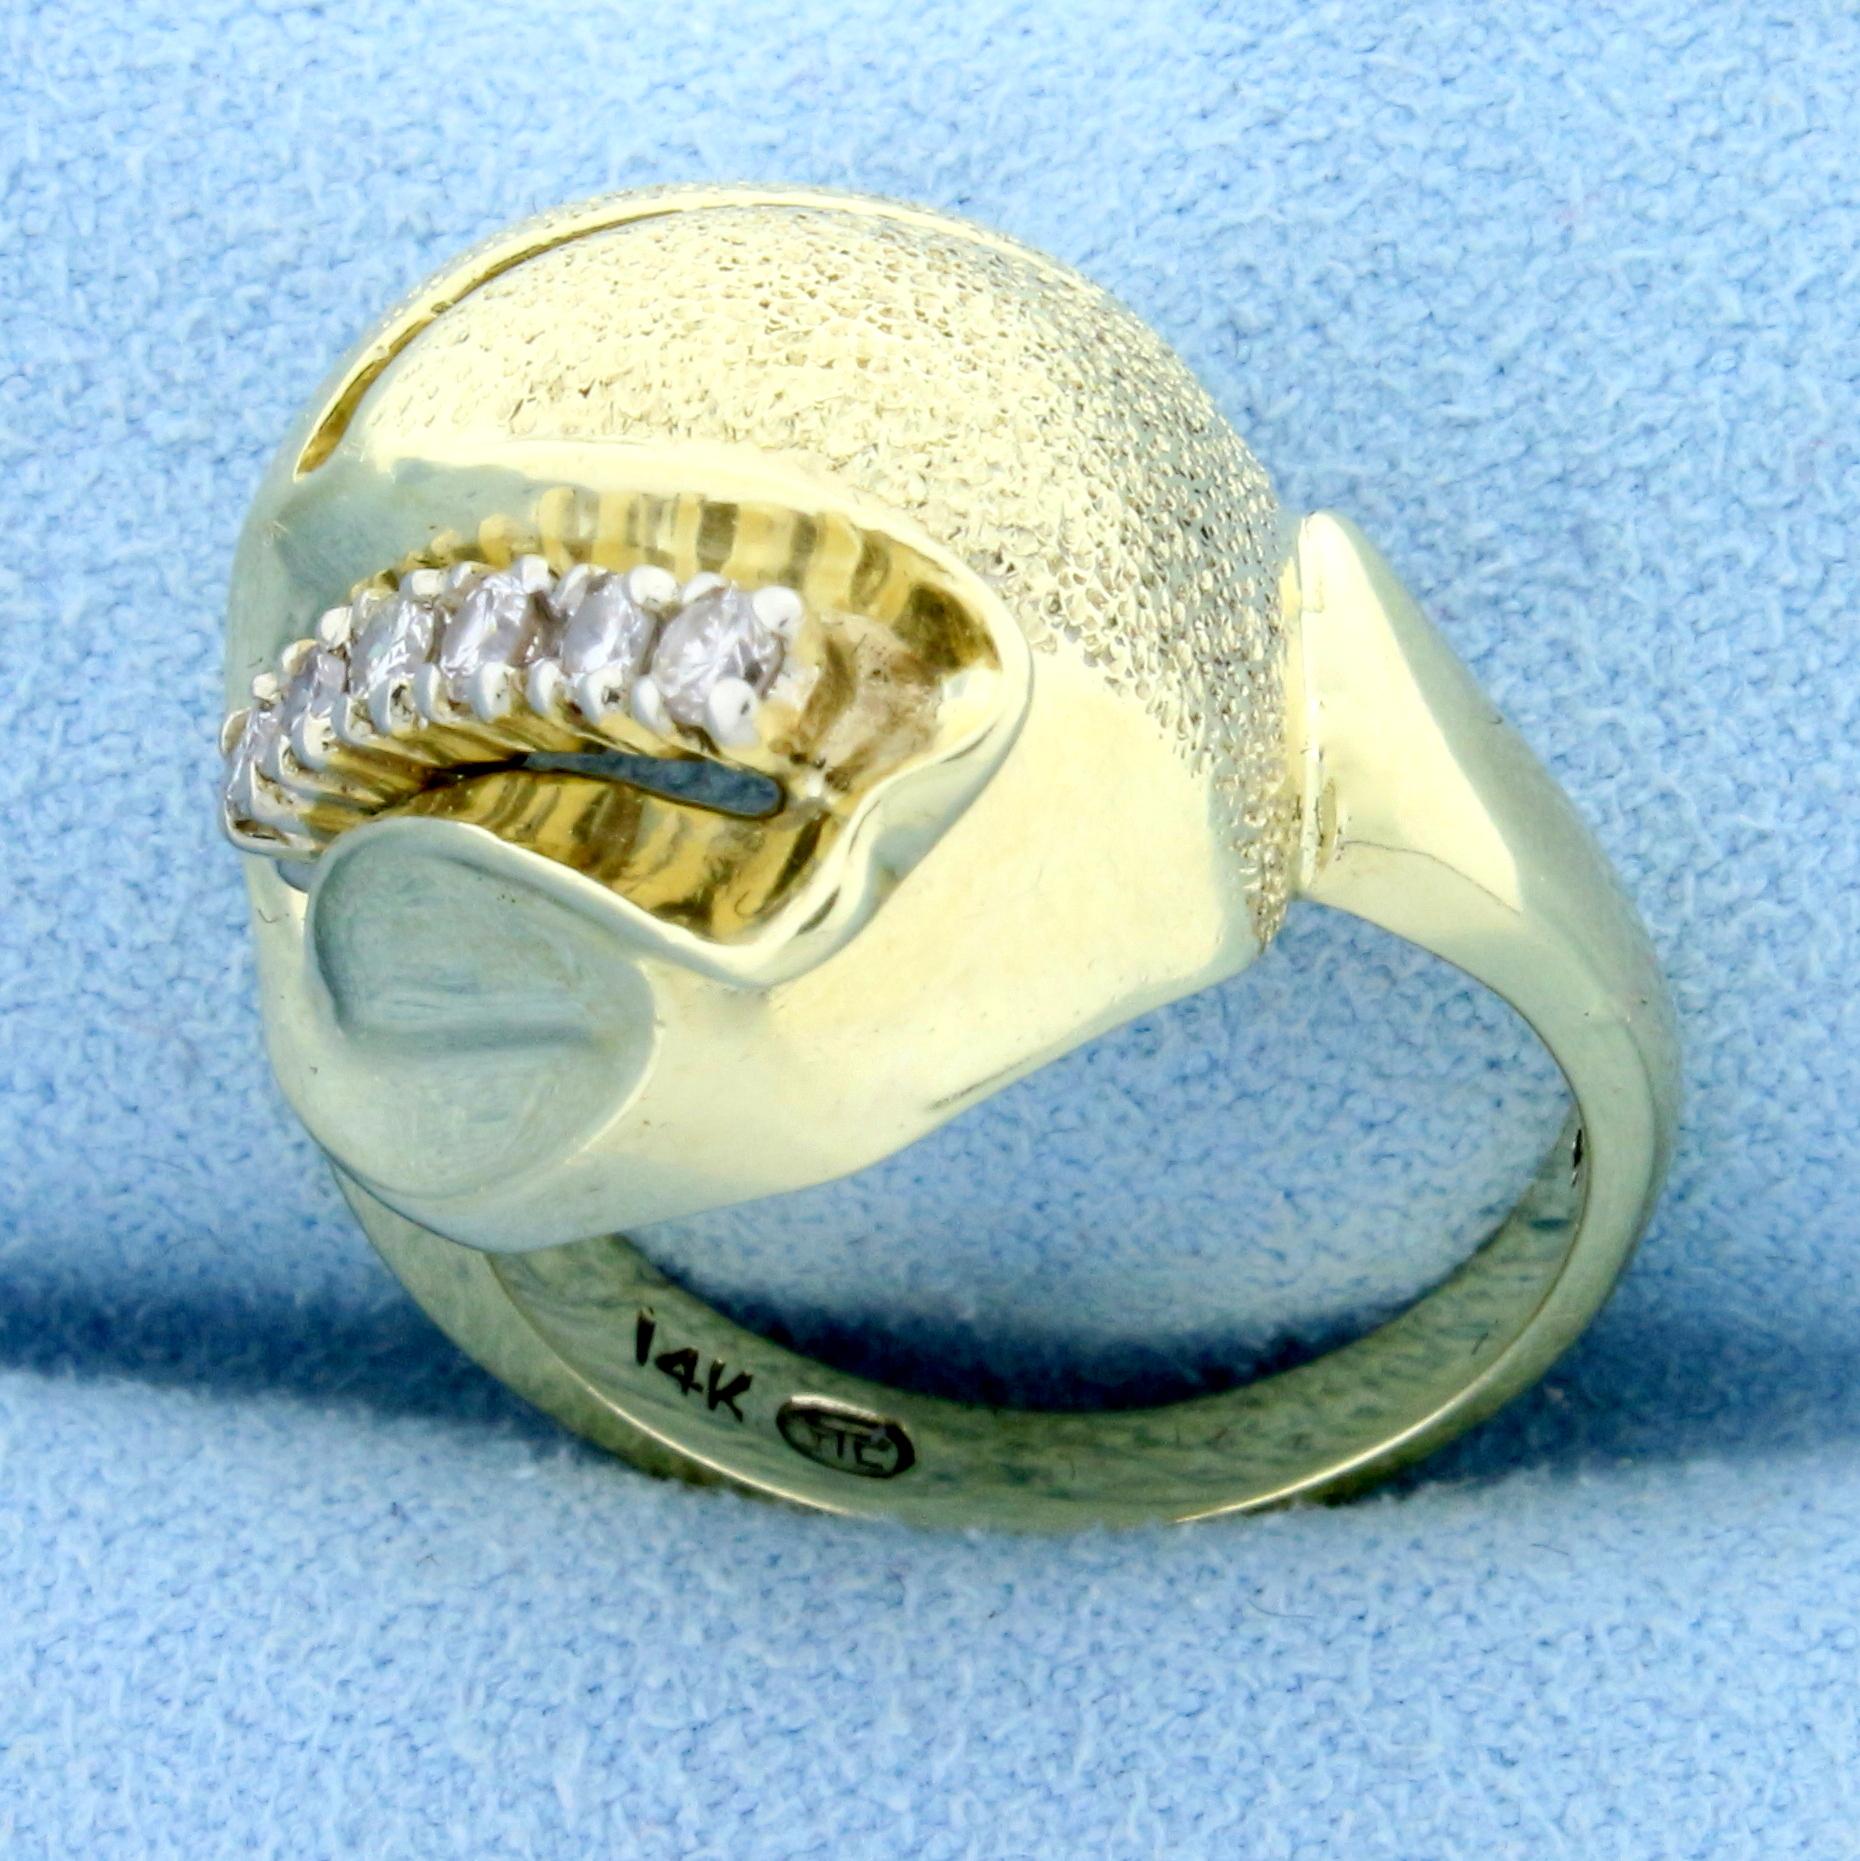 Unique Art Deco Style Diamond Ring In 14k Yellow Gold